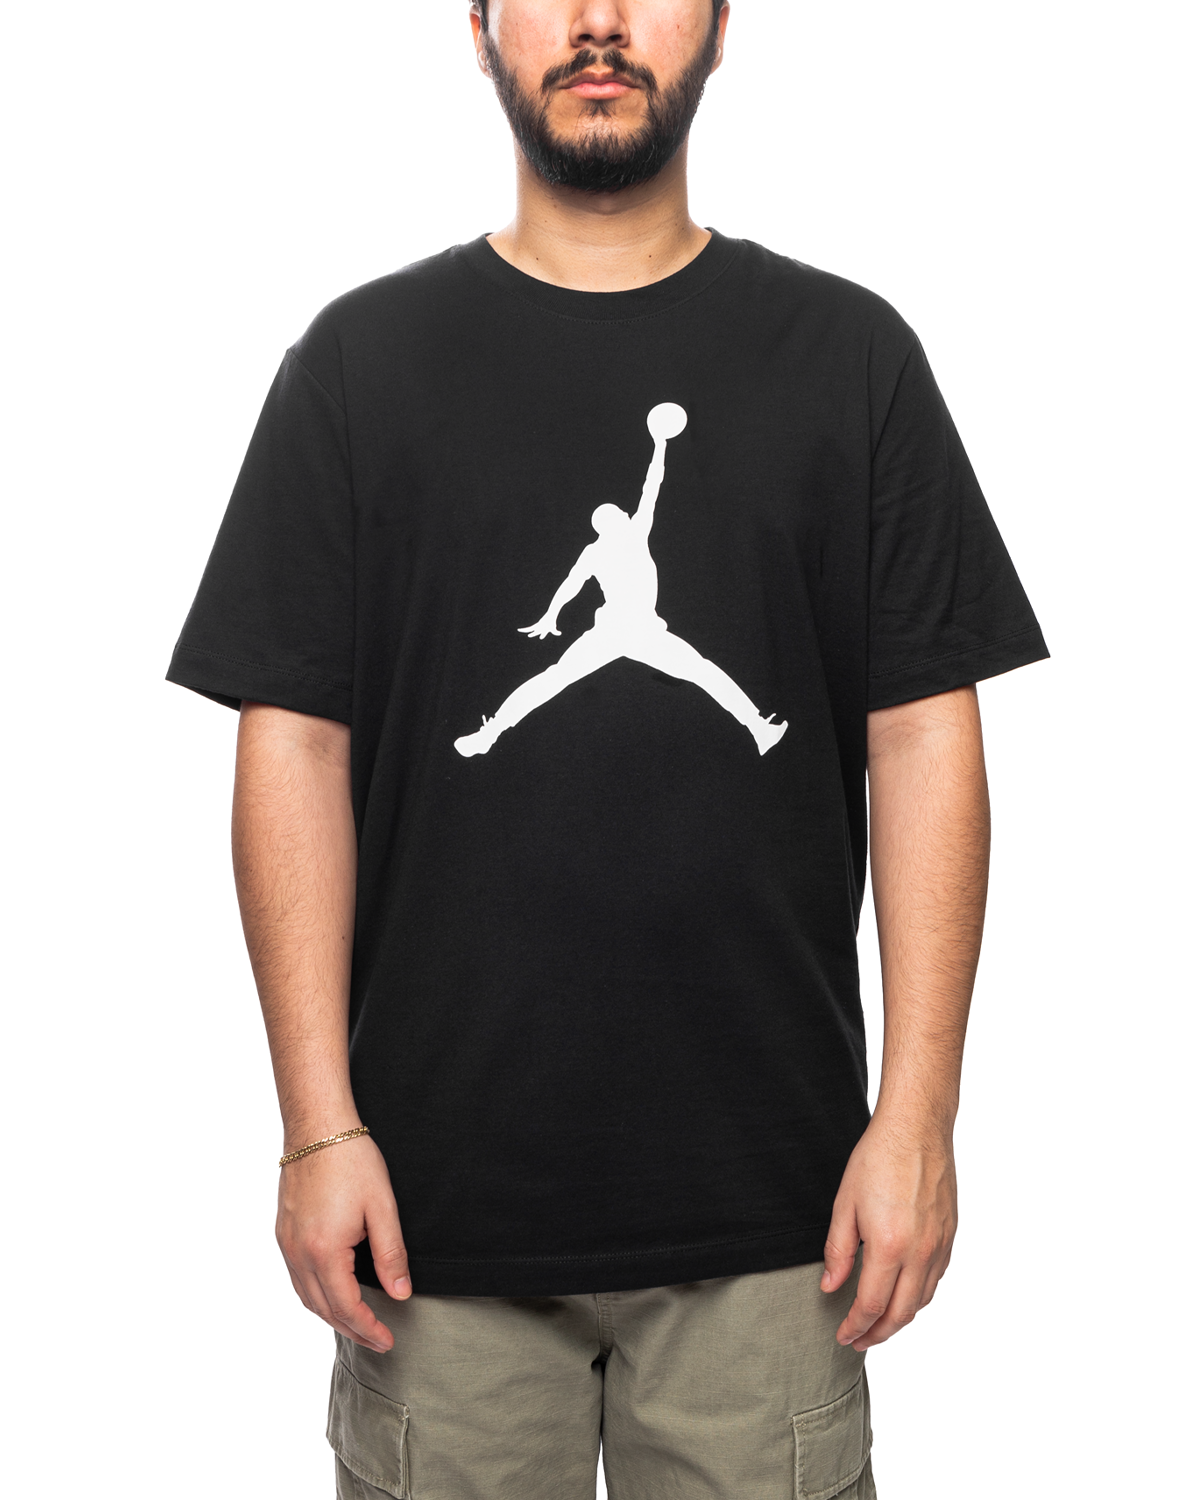 Jumpman T-Shirt Black/White